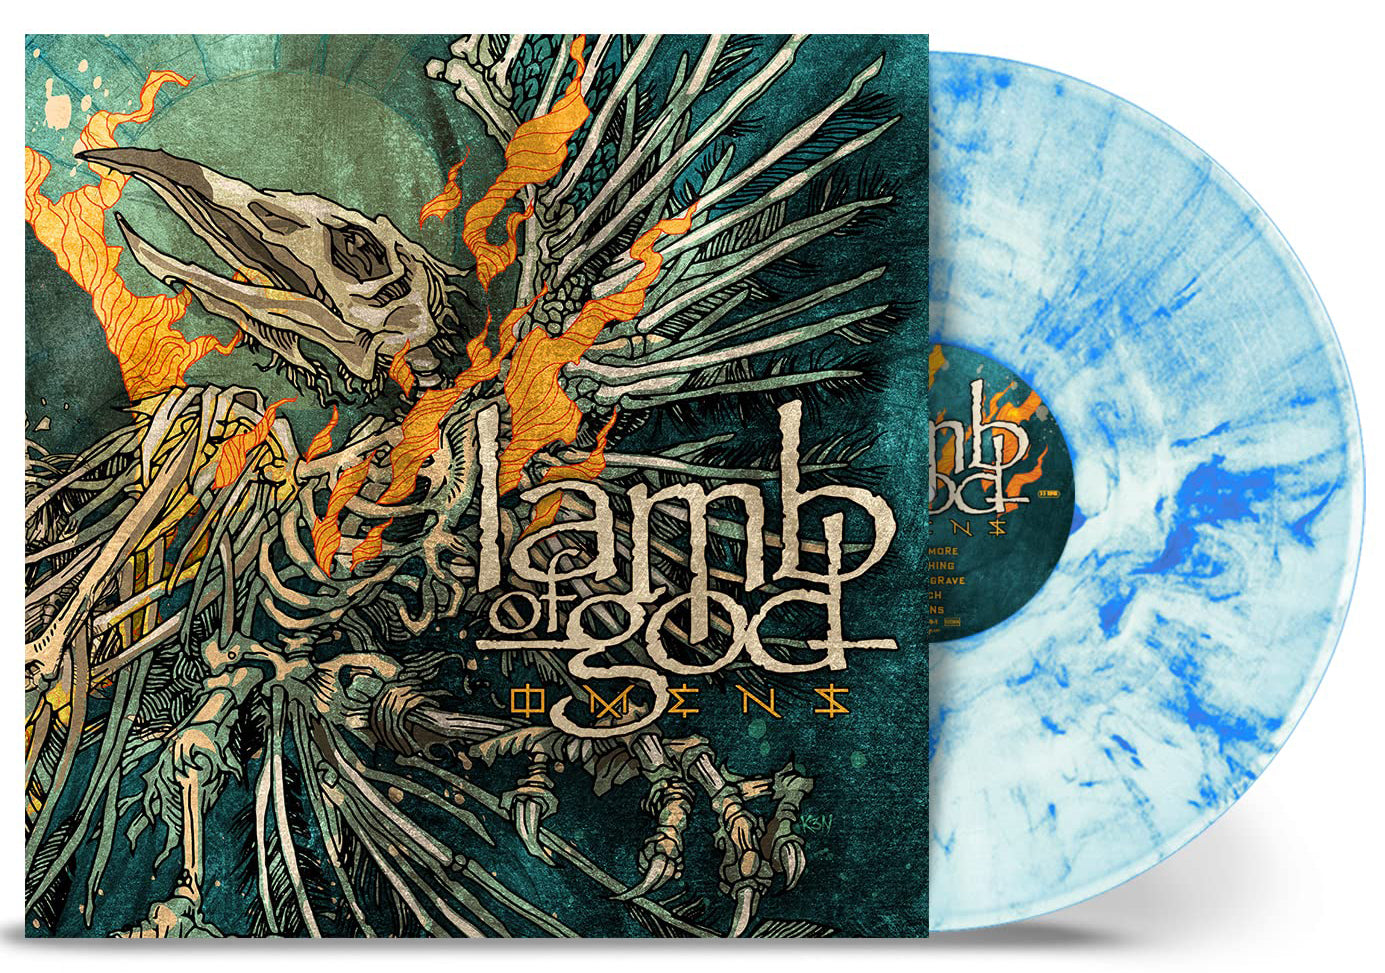 Lamb Of God Omens Limited Marbled White/Blue Vinyl LP